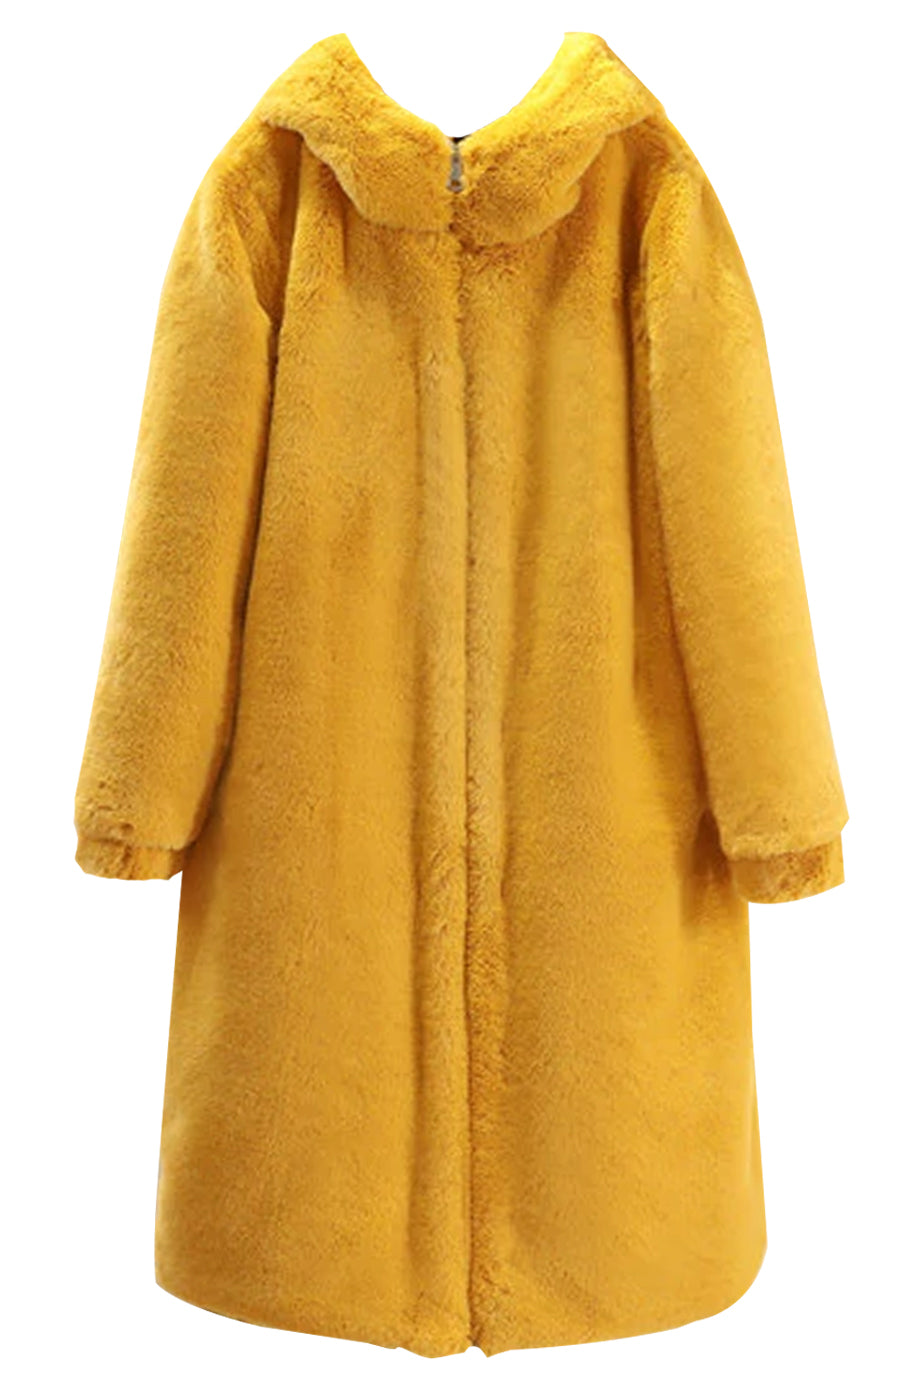 Seronia Μουσταρδί Κίτρινο Παλτό με Συνθετική Γούνα και Κουκούλα | Γυναικεία Ρούχα - Παλτό Πανοφώρια